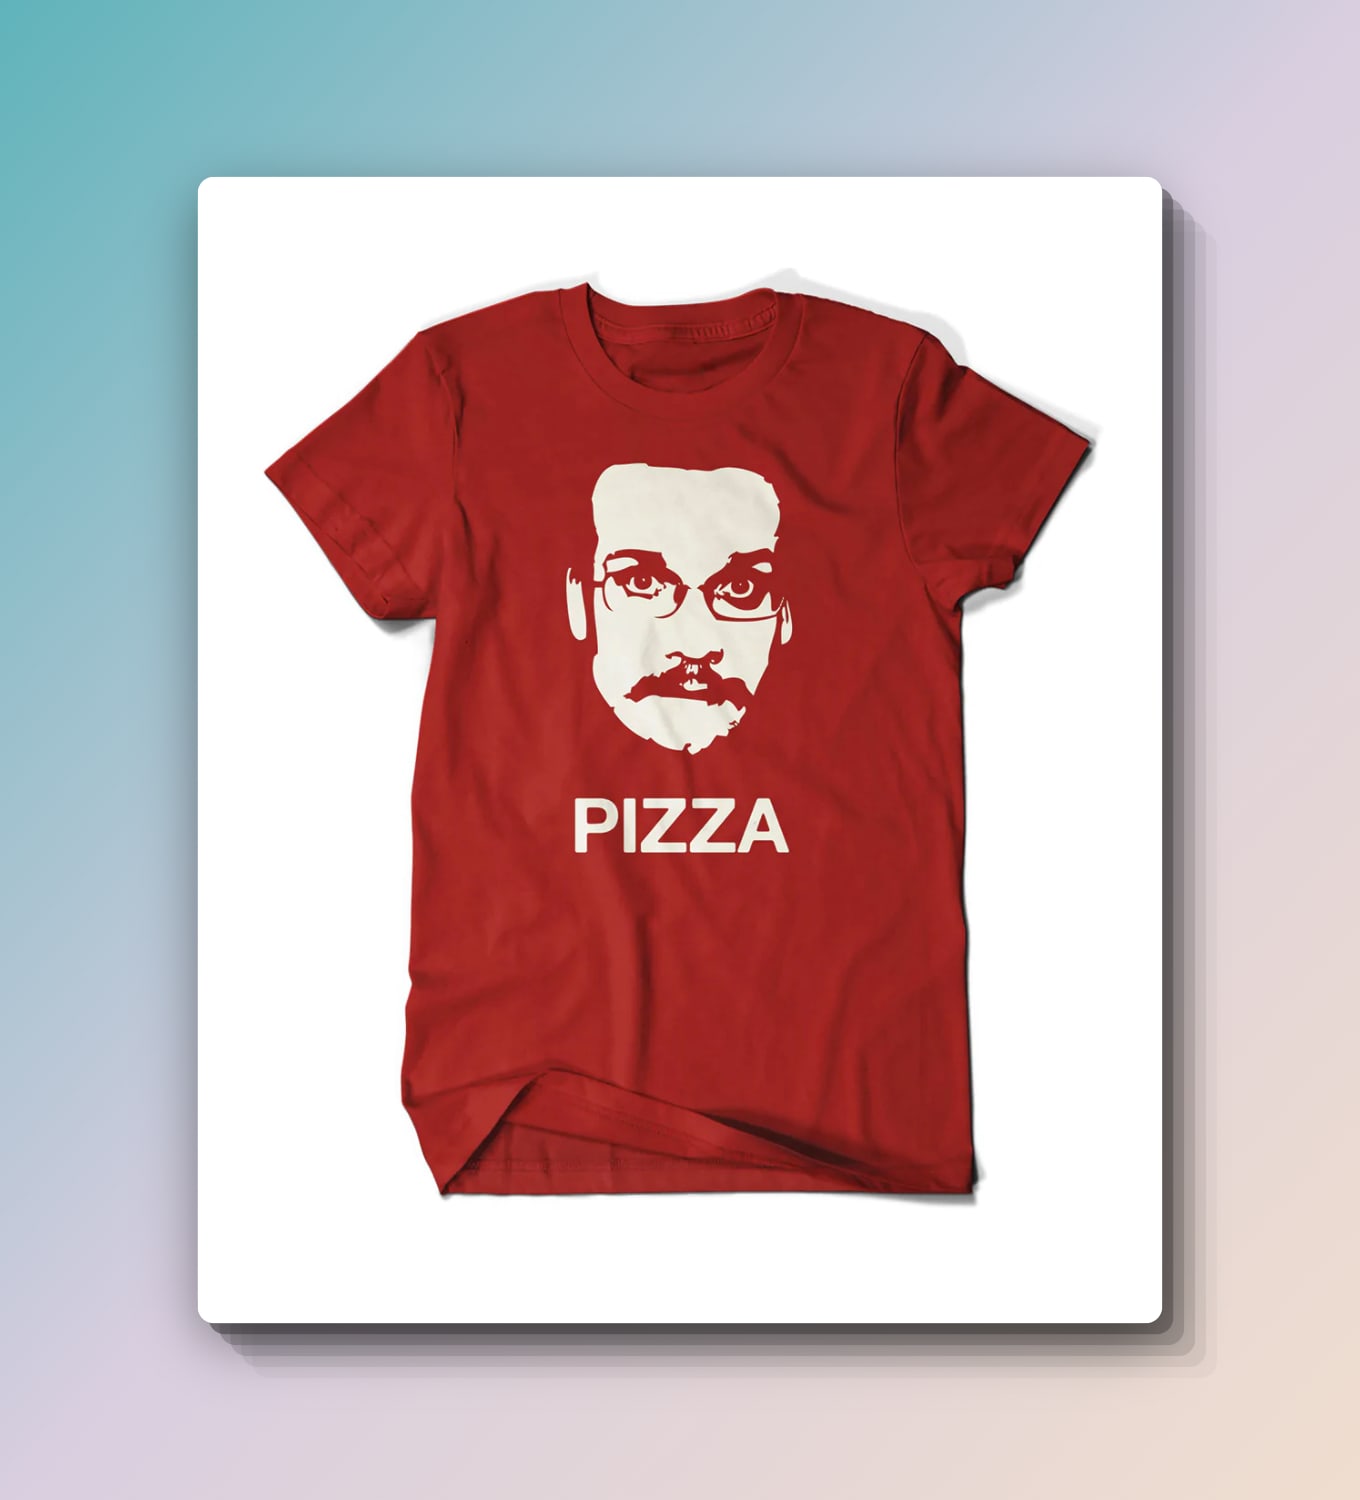 The original Pizza John t-shirt in red